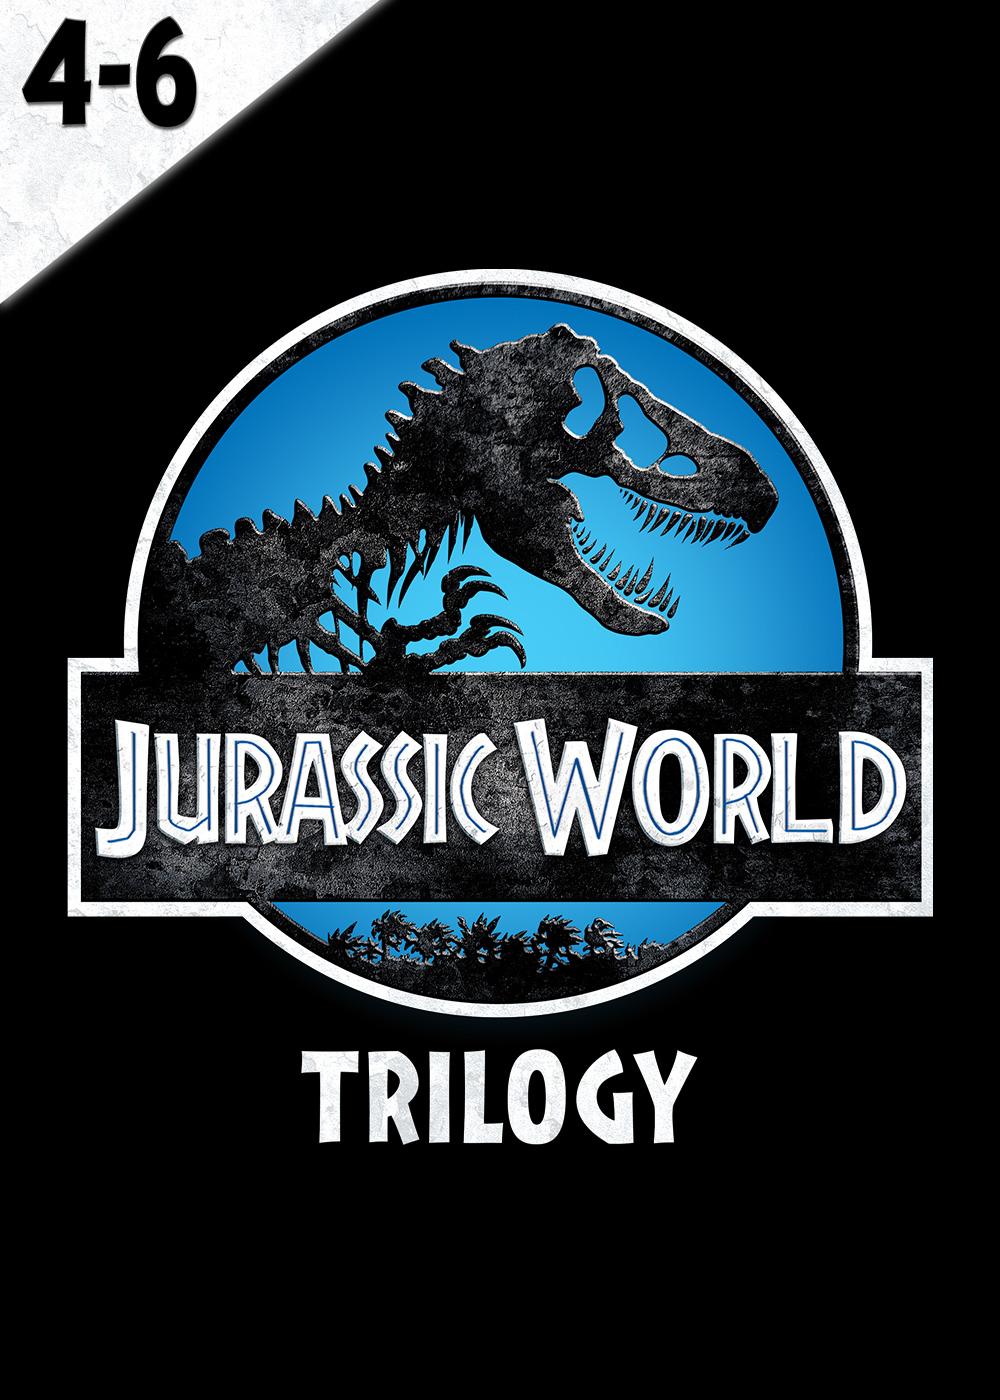 Jurassic World Trilogy (4-6) - Digital Code - UHD